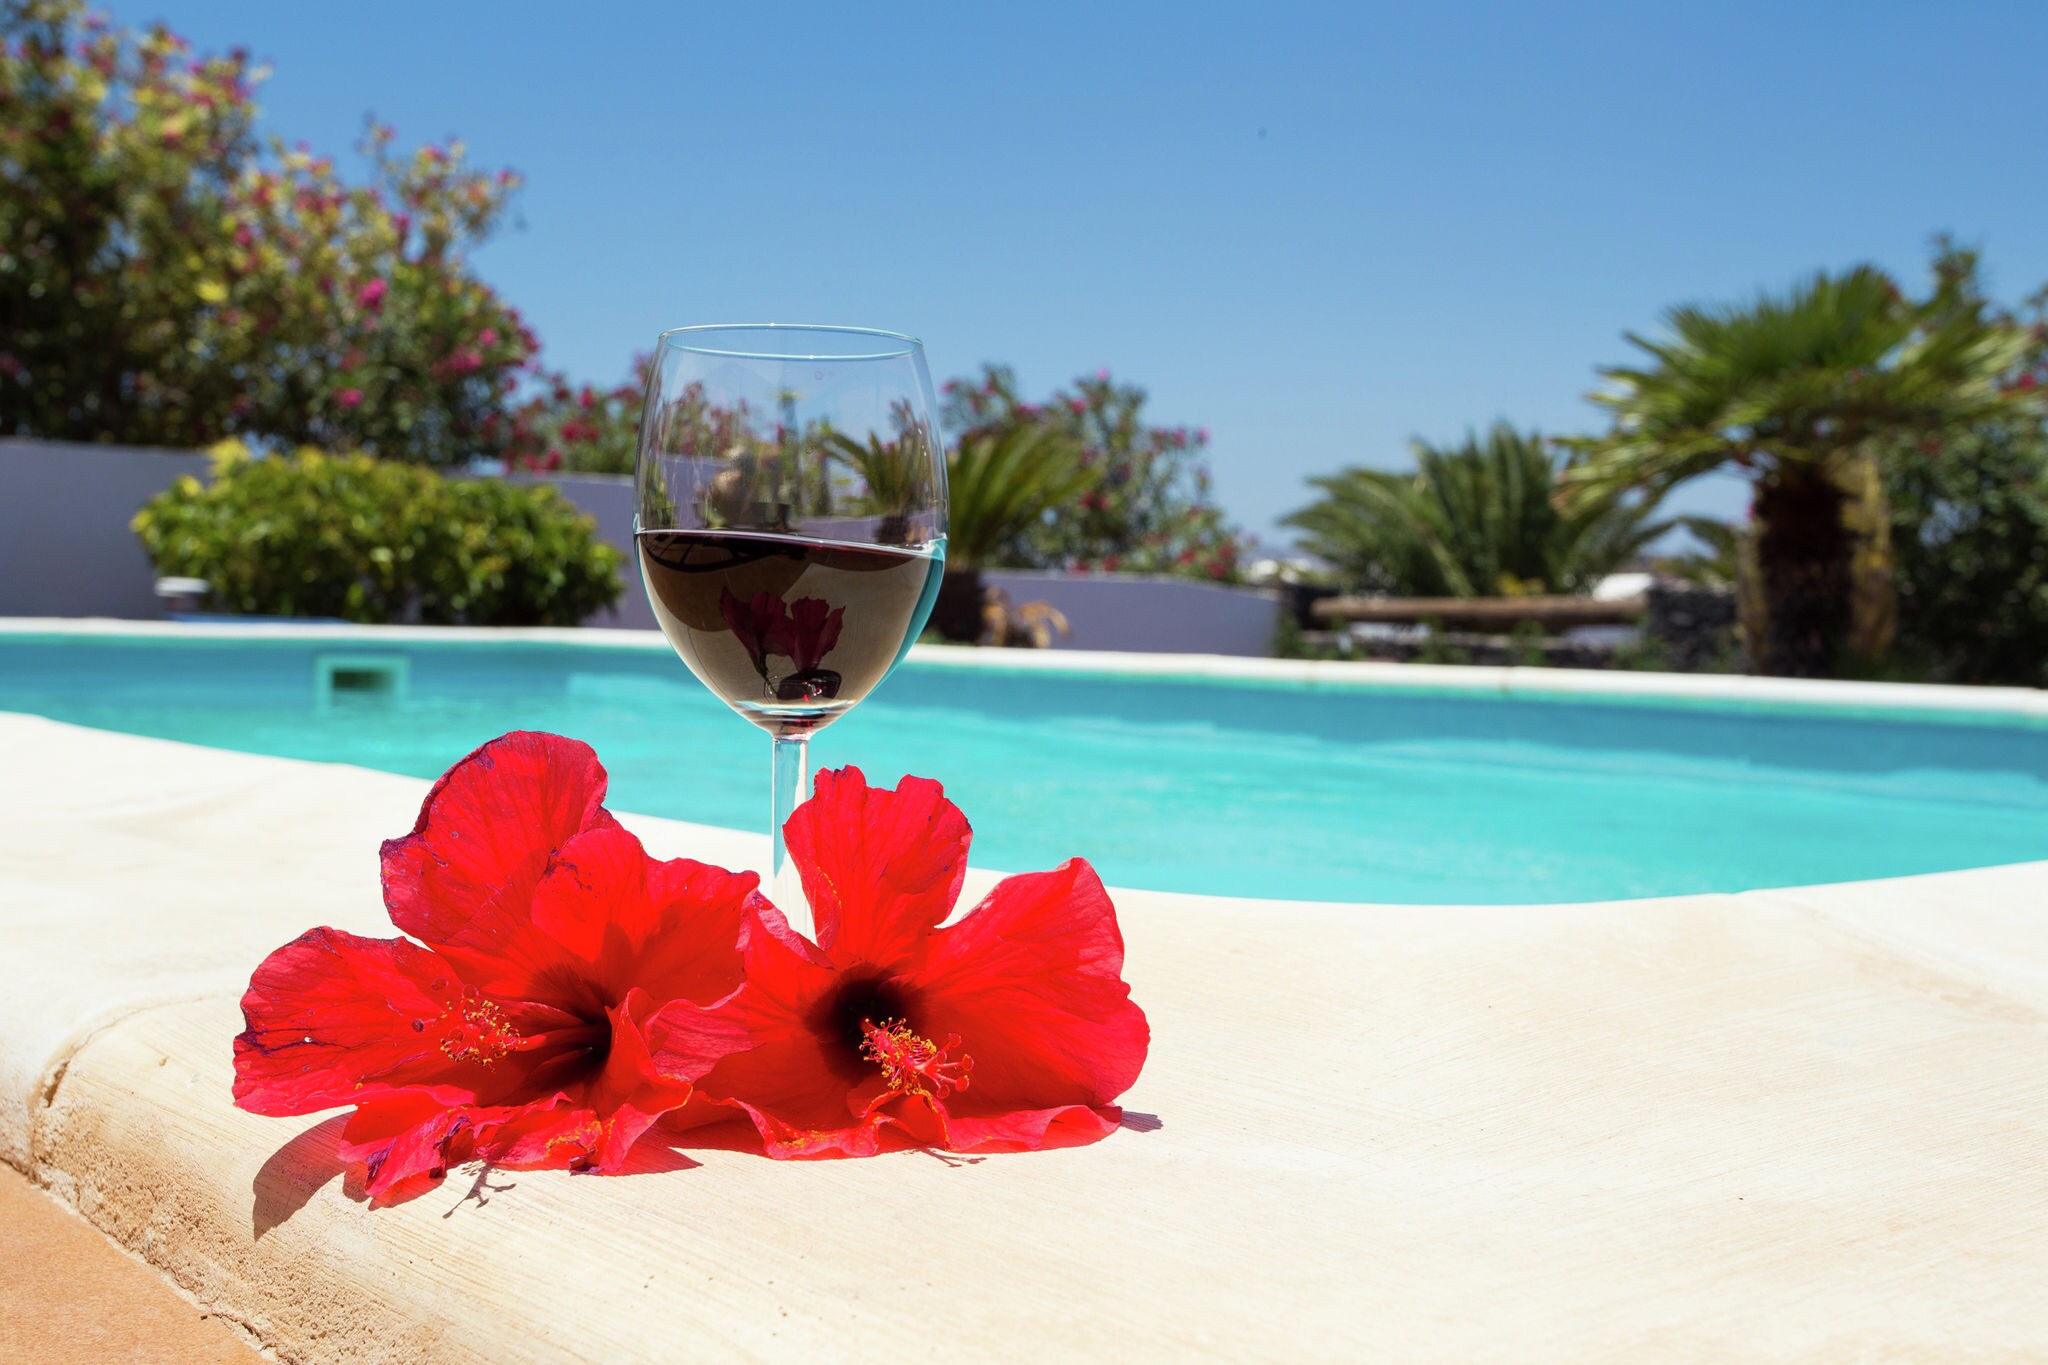 Spacious Villa in Playa Blanca with Swimming Pool